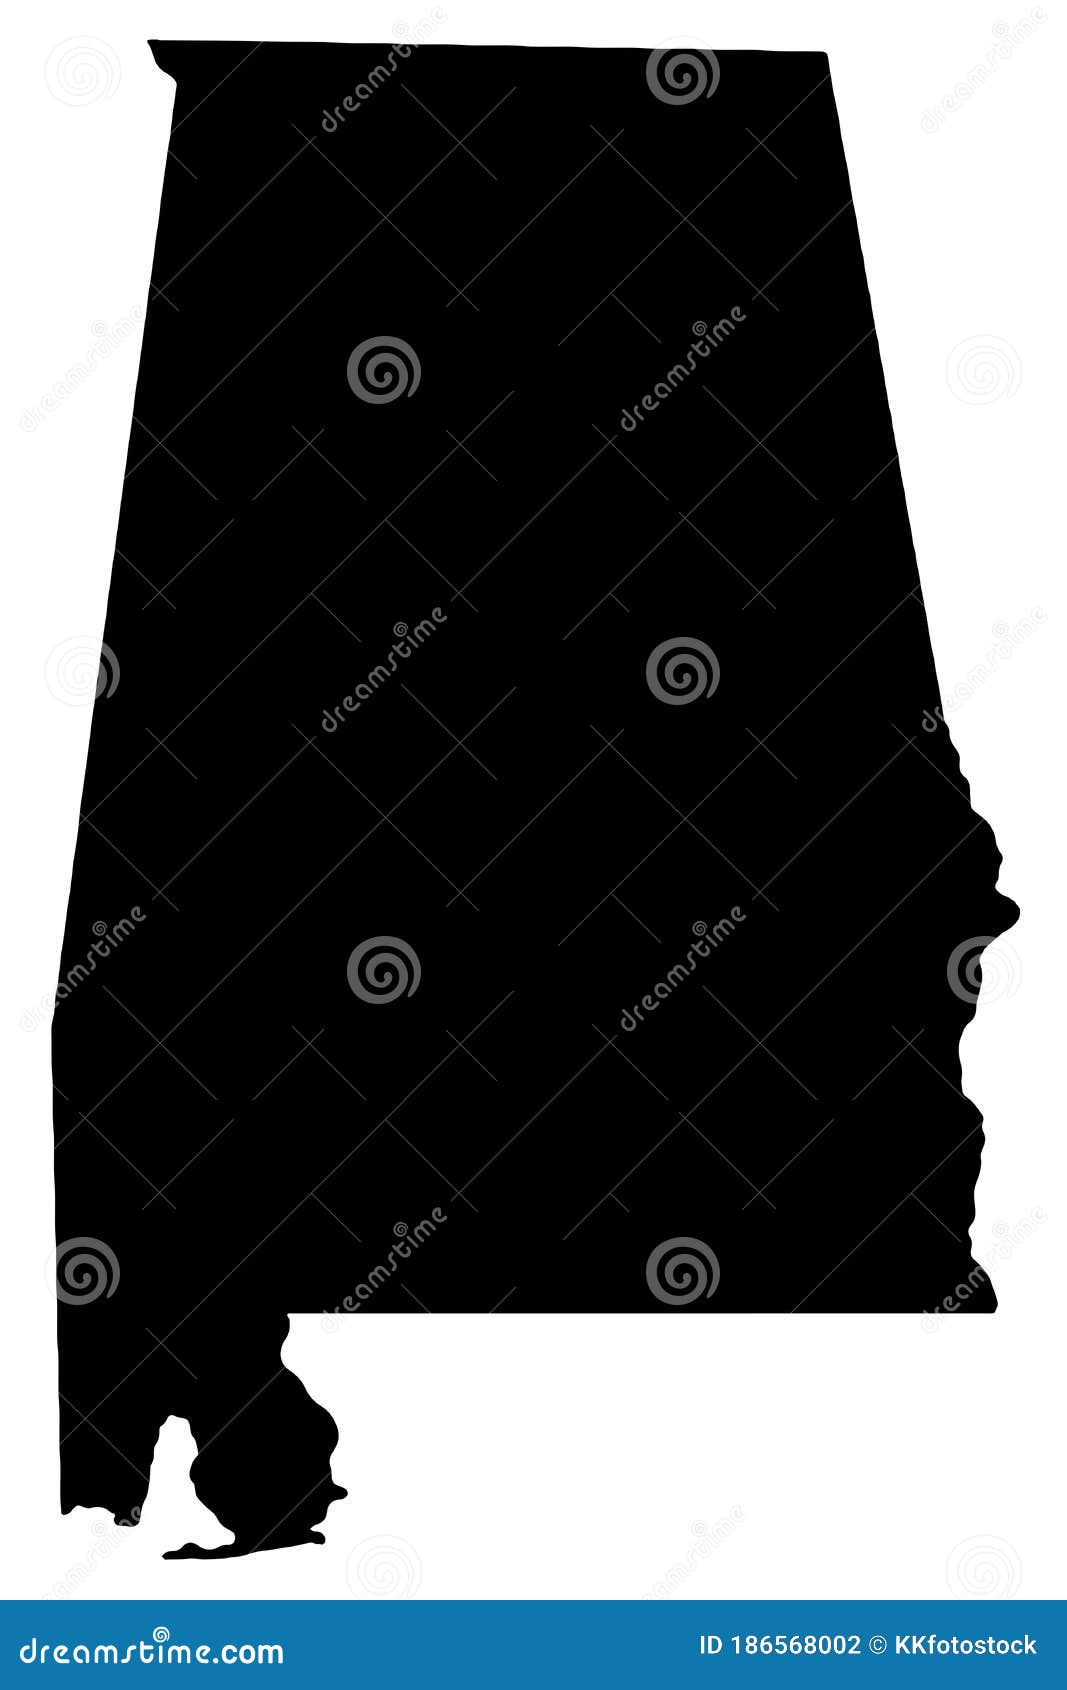 Alabama State Map Black Silhouette Illustration Stock Vector